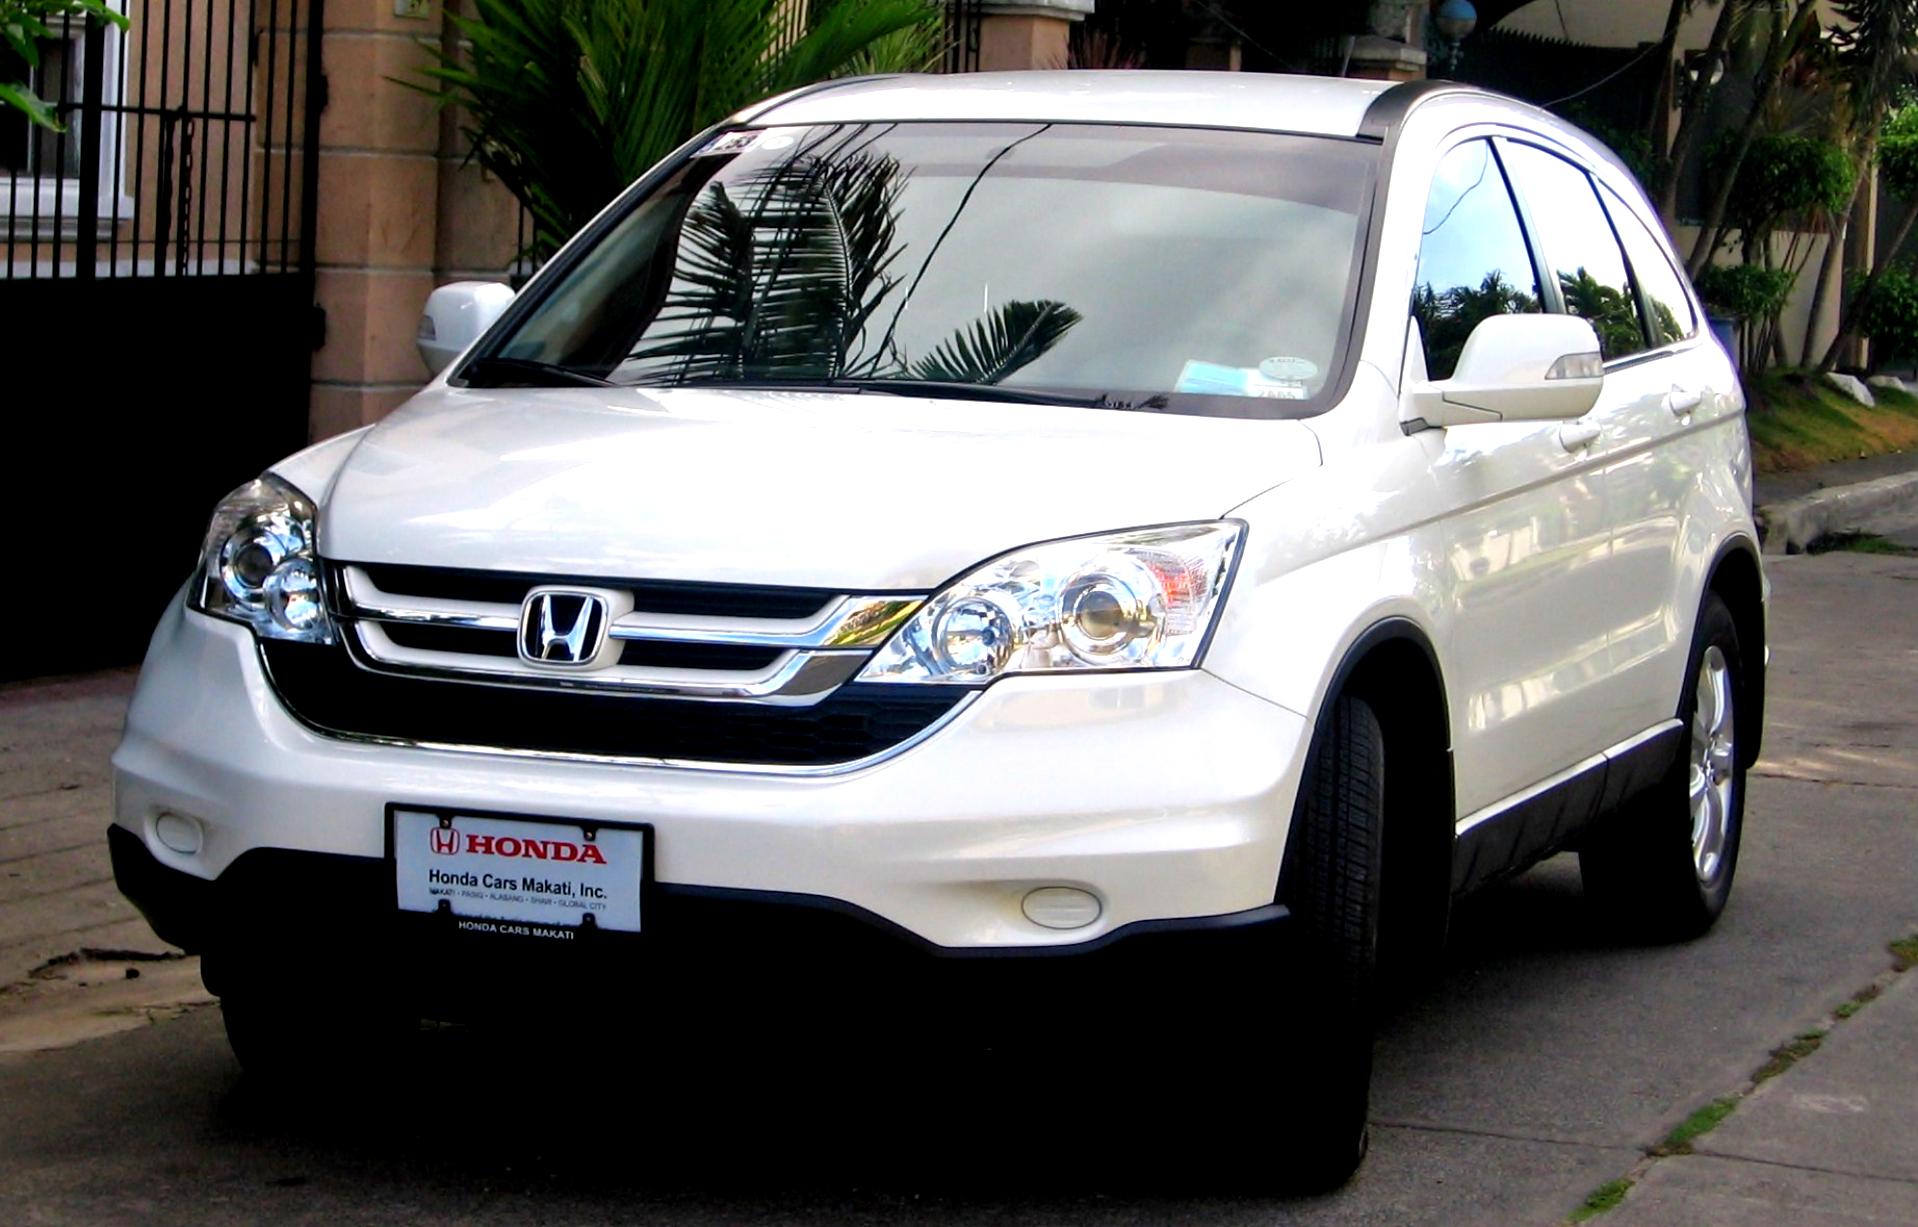 Купить хонда срв новгород. Honda CRV 2010 белая. Honda CR-V 2010 белая. Хонда СРВ 2010. Хонда СРВ 2010 белый.